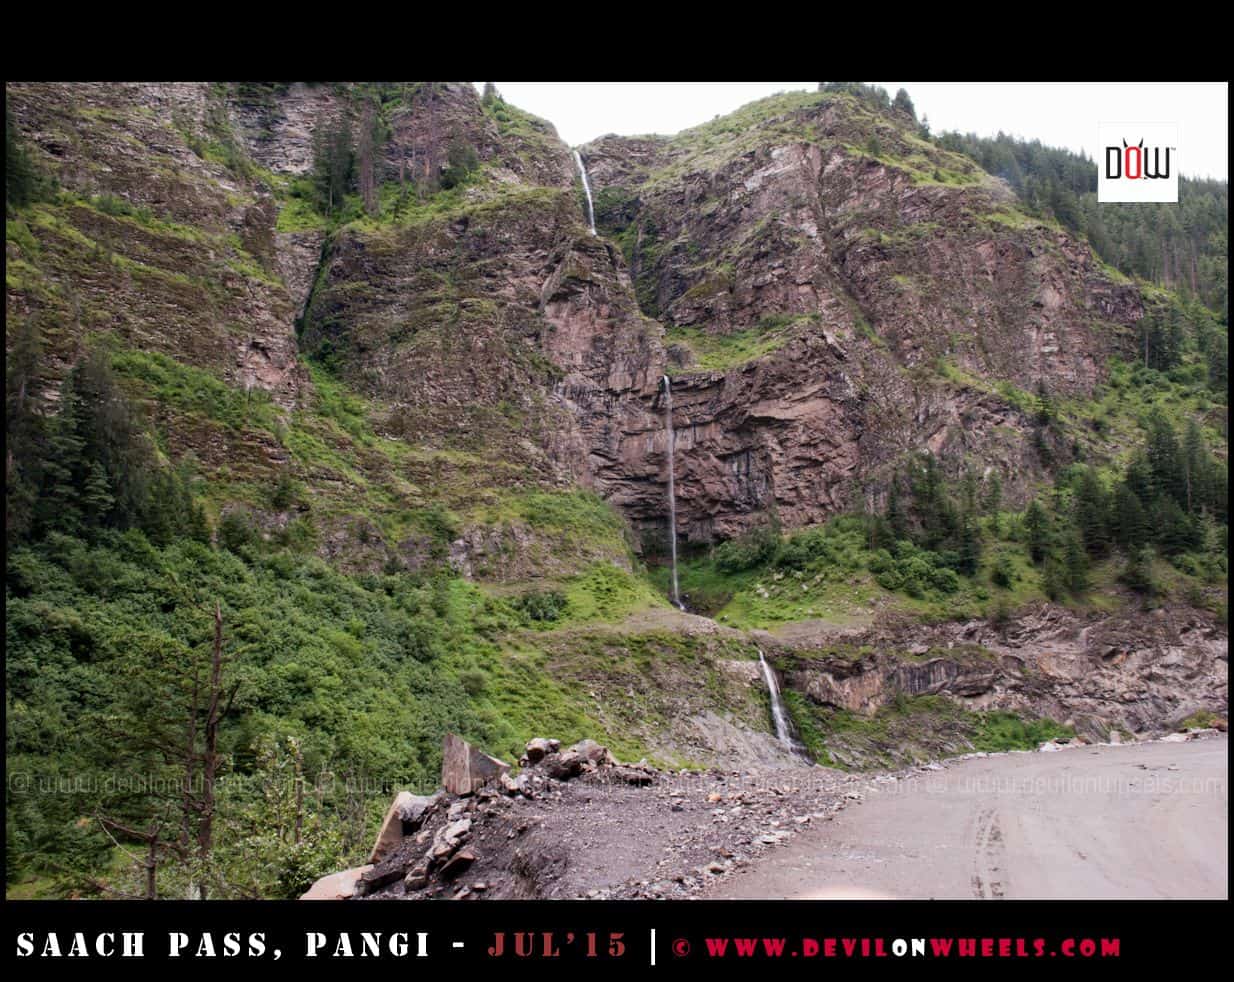 In the land of Waterfalls - Pangi Valley